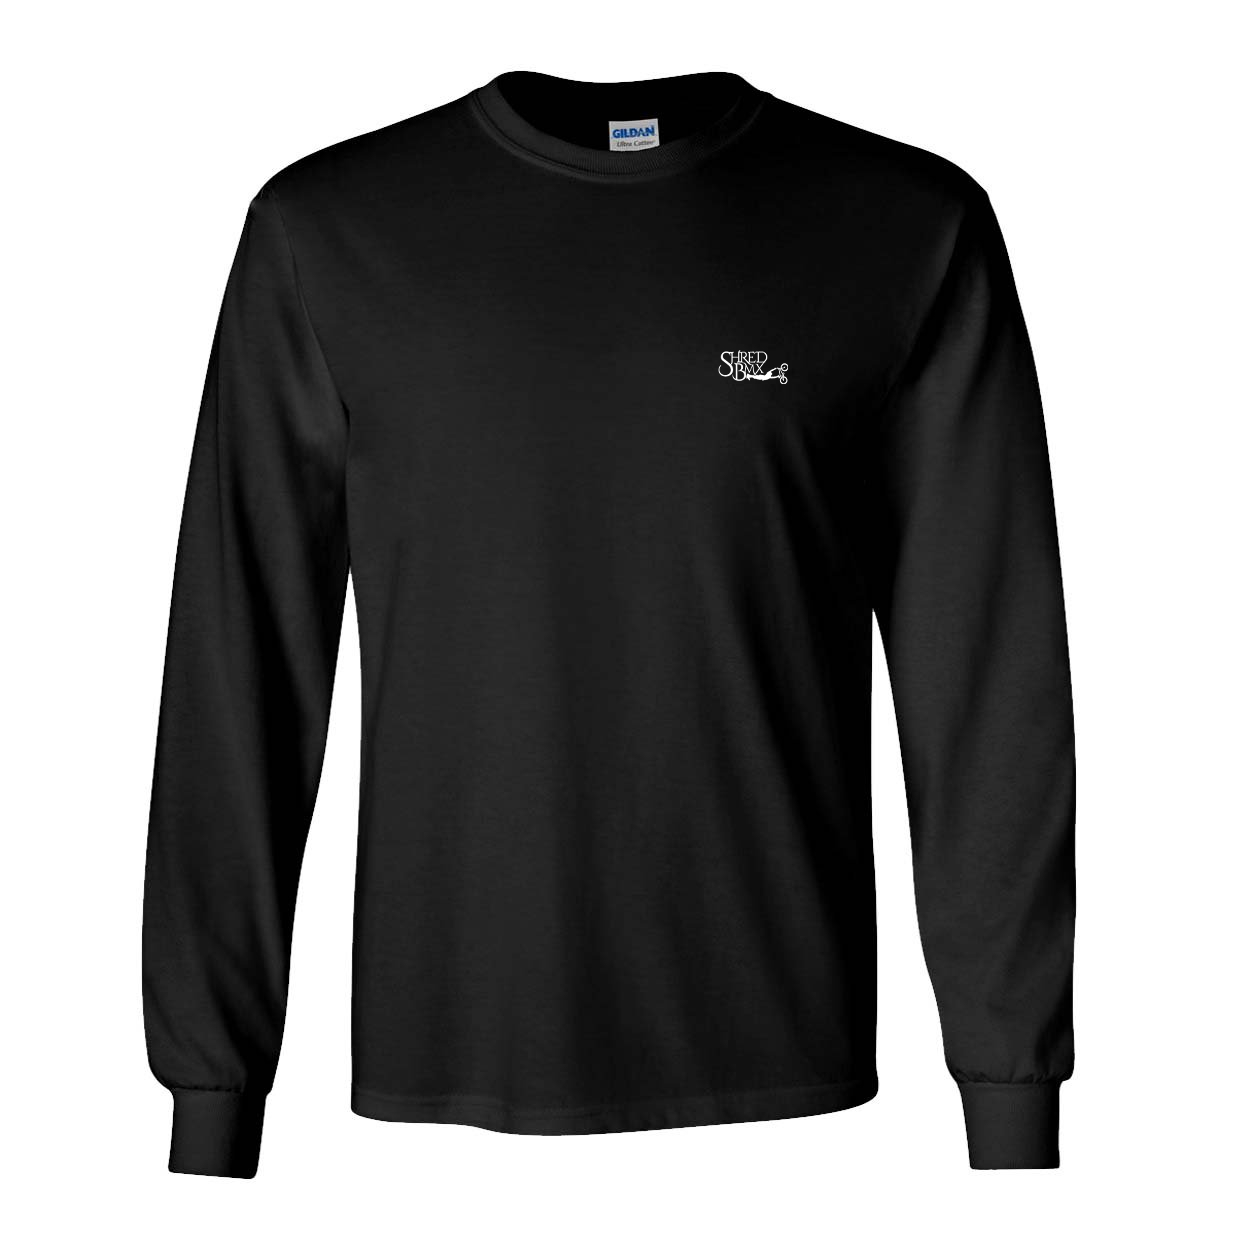 Shred BMX Night Out Long Sleeve T-Shirt Black (White Logo)